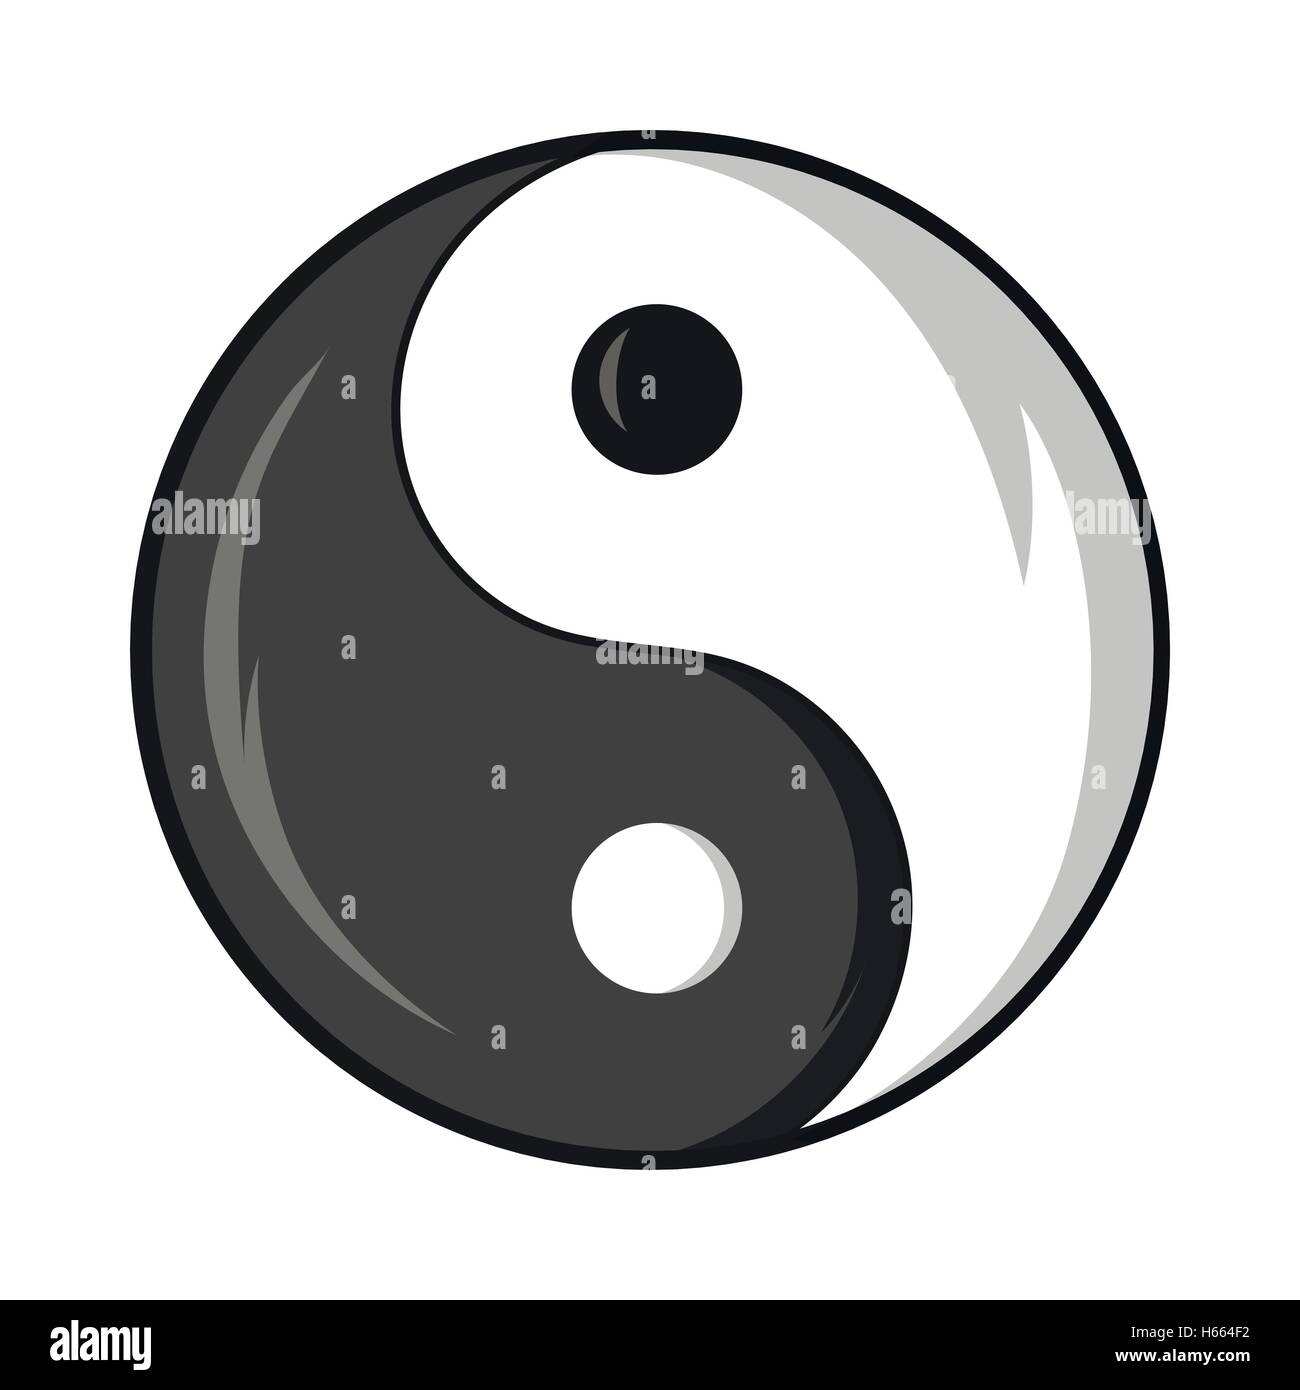 Yin and yang symbol icon, cartoon style Stock Vector